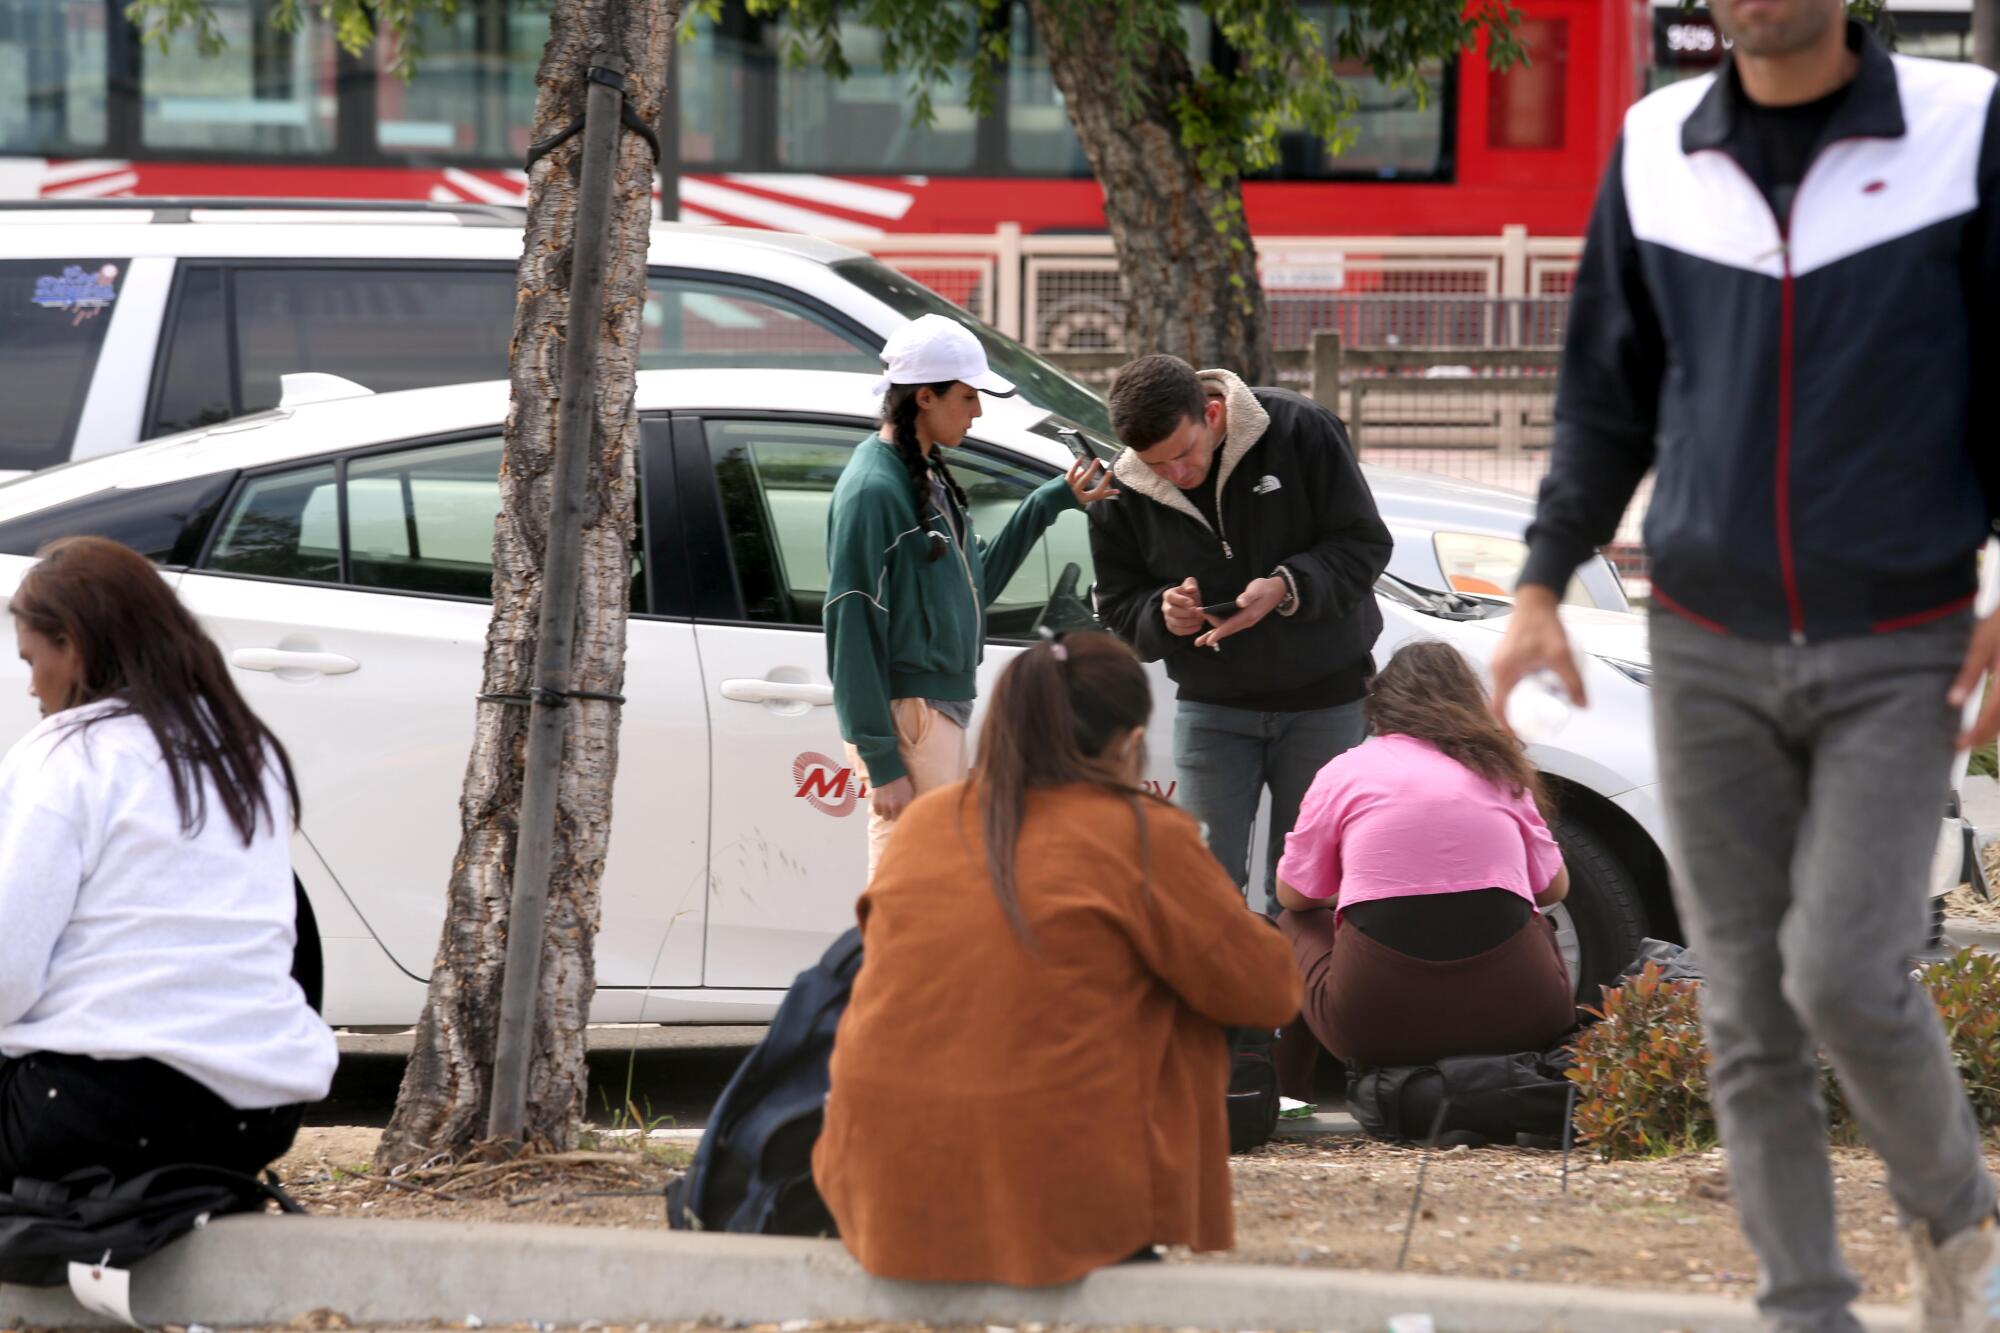 People sit on a sidewalk, some talking to a man.